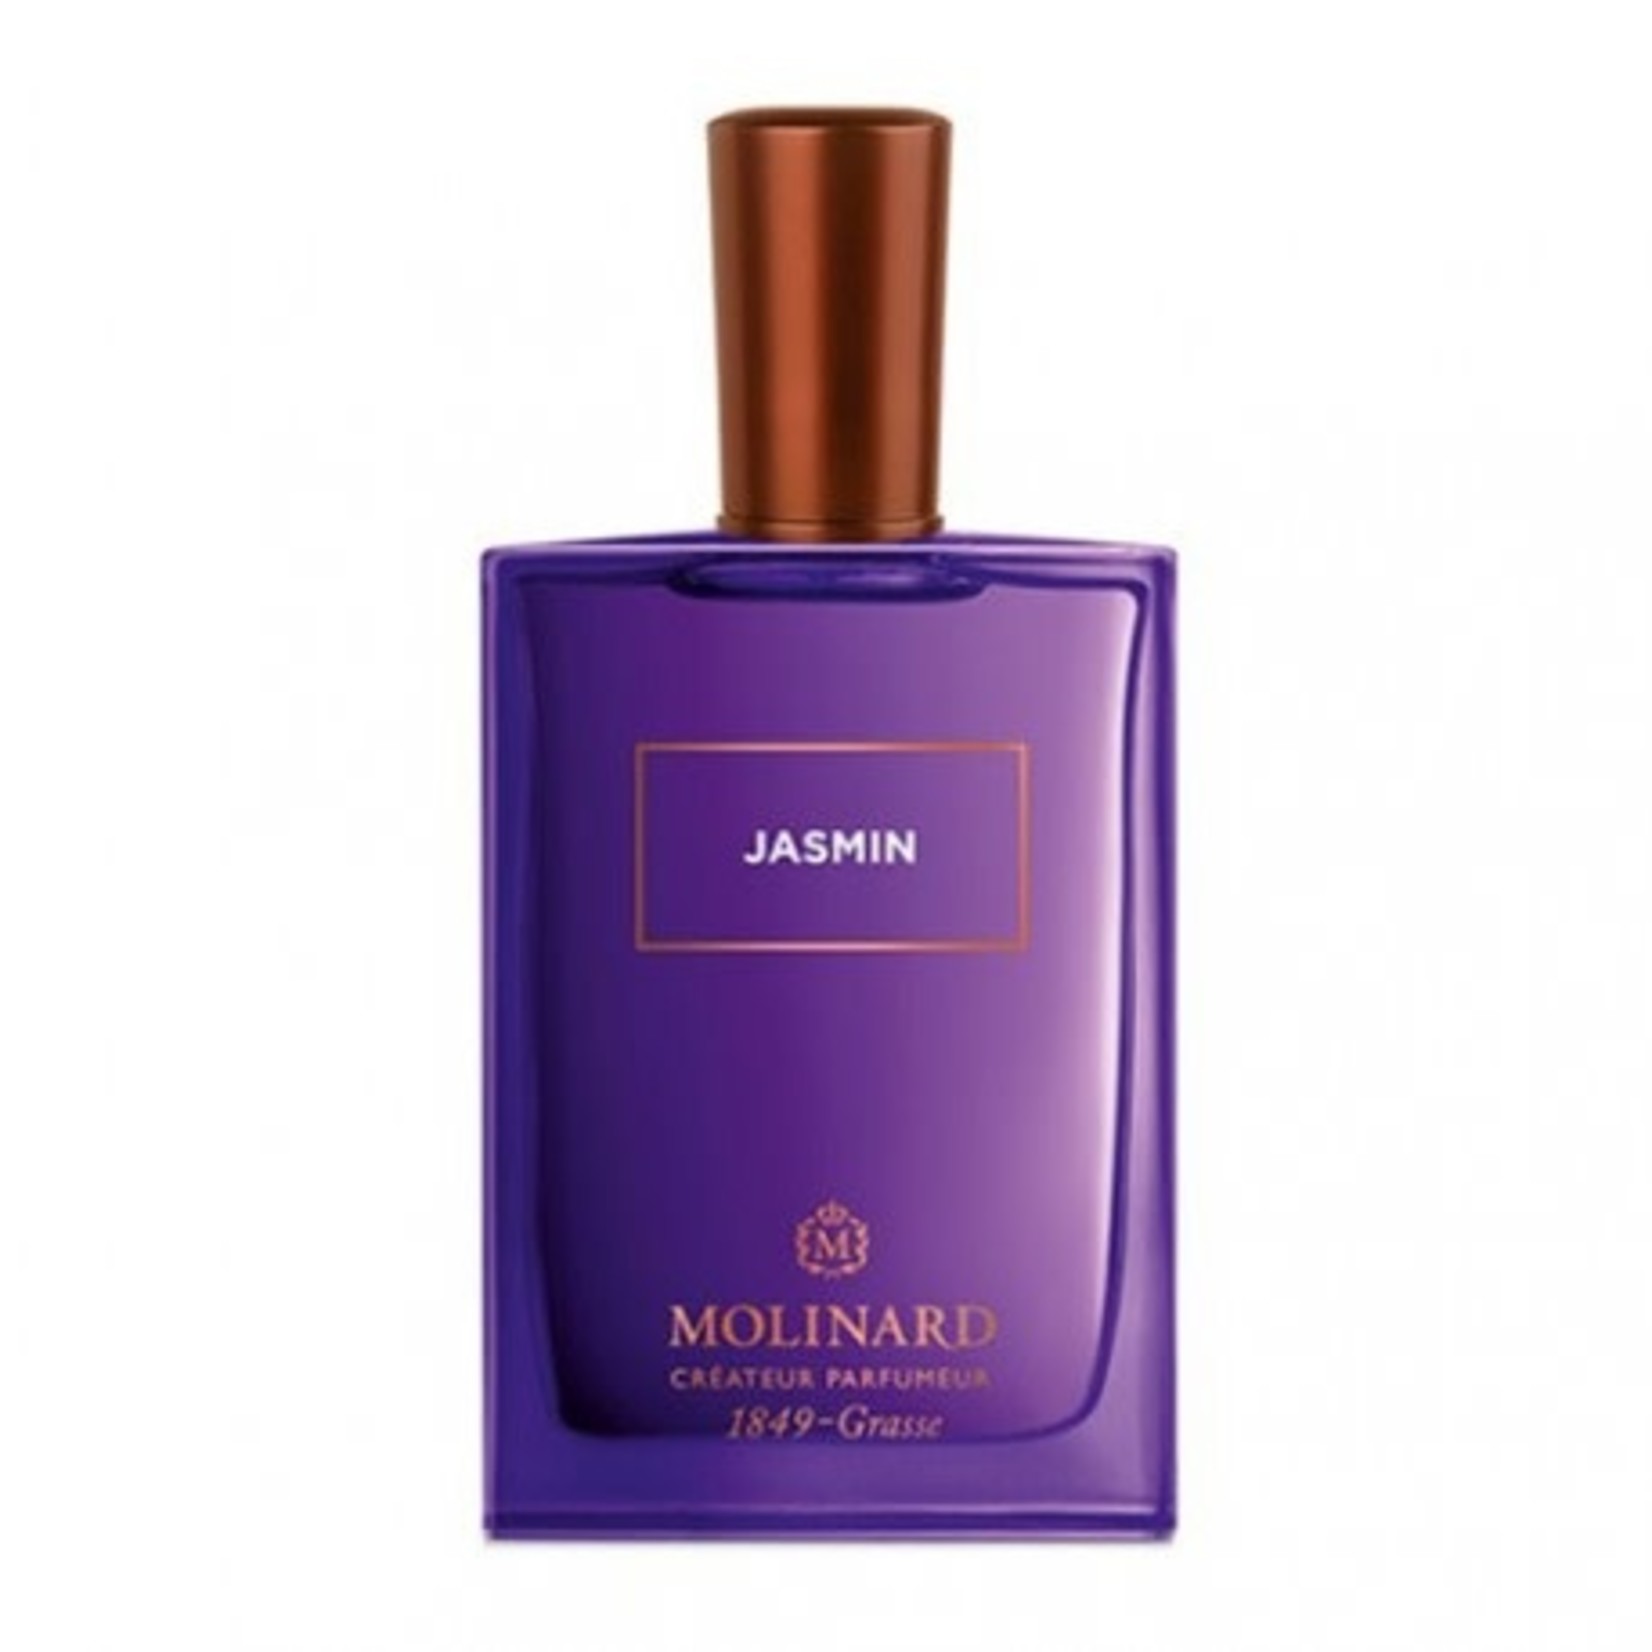 MOLINARD JASMIN Eau De Parfum